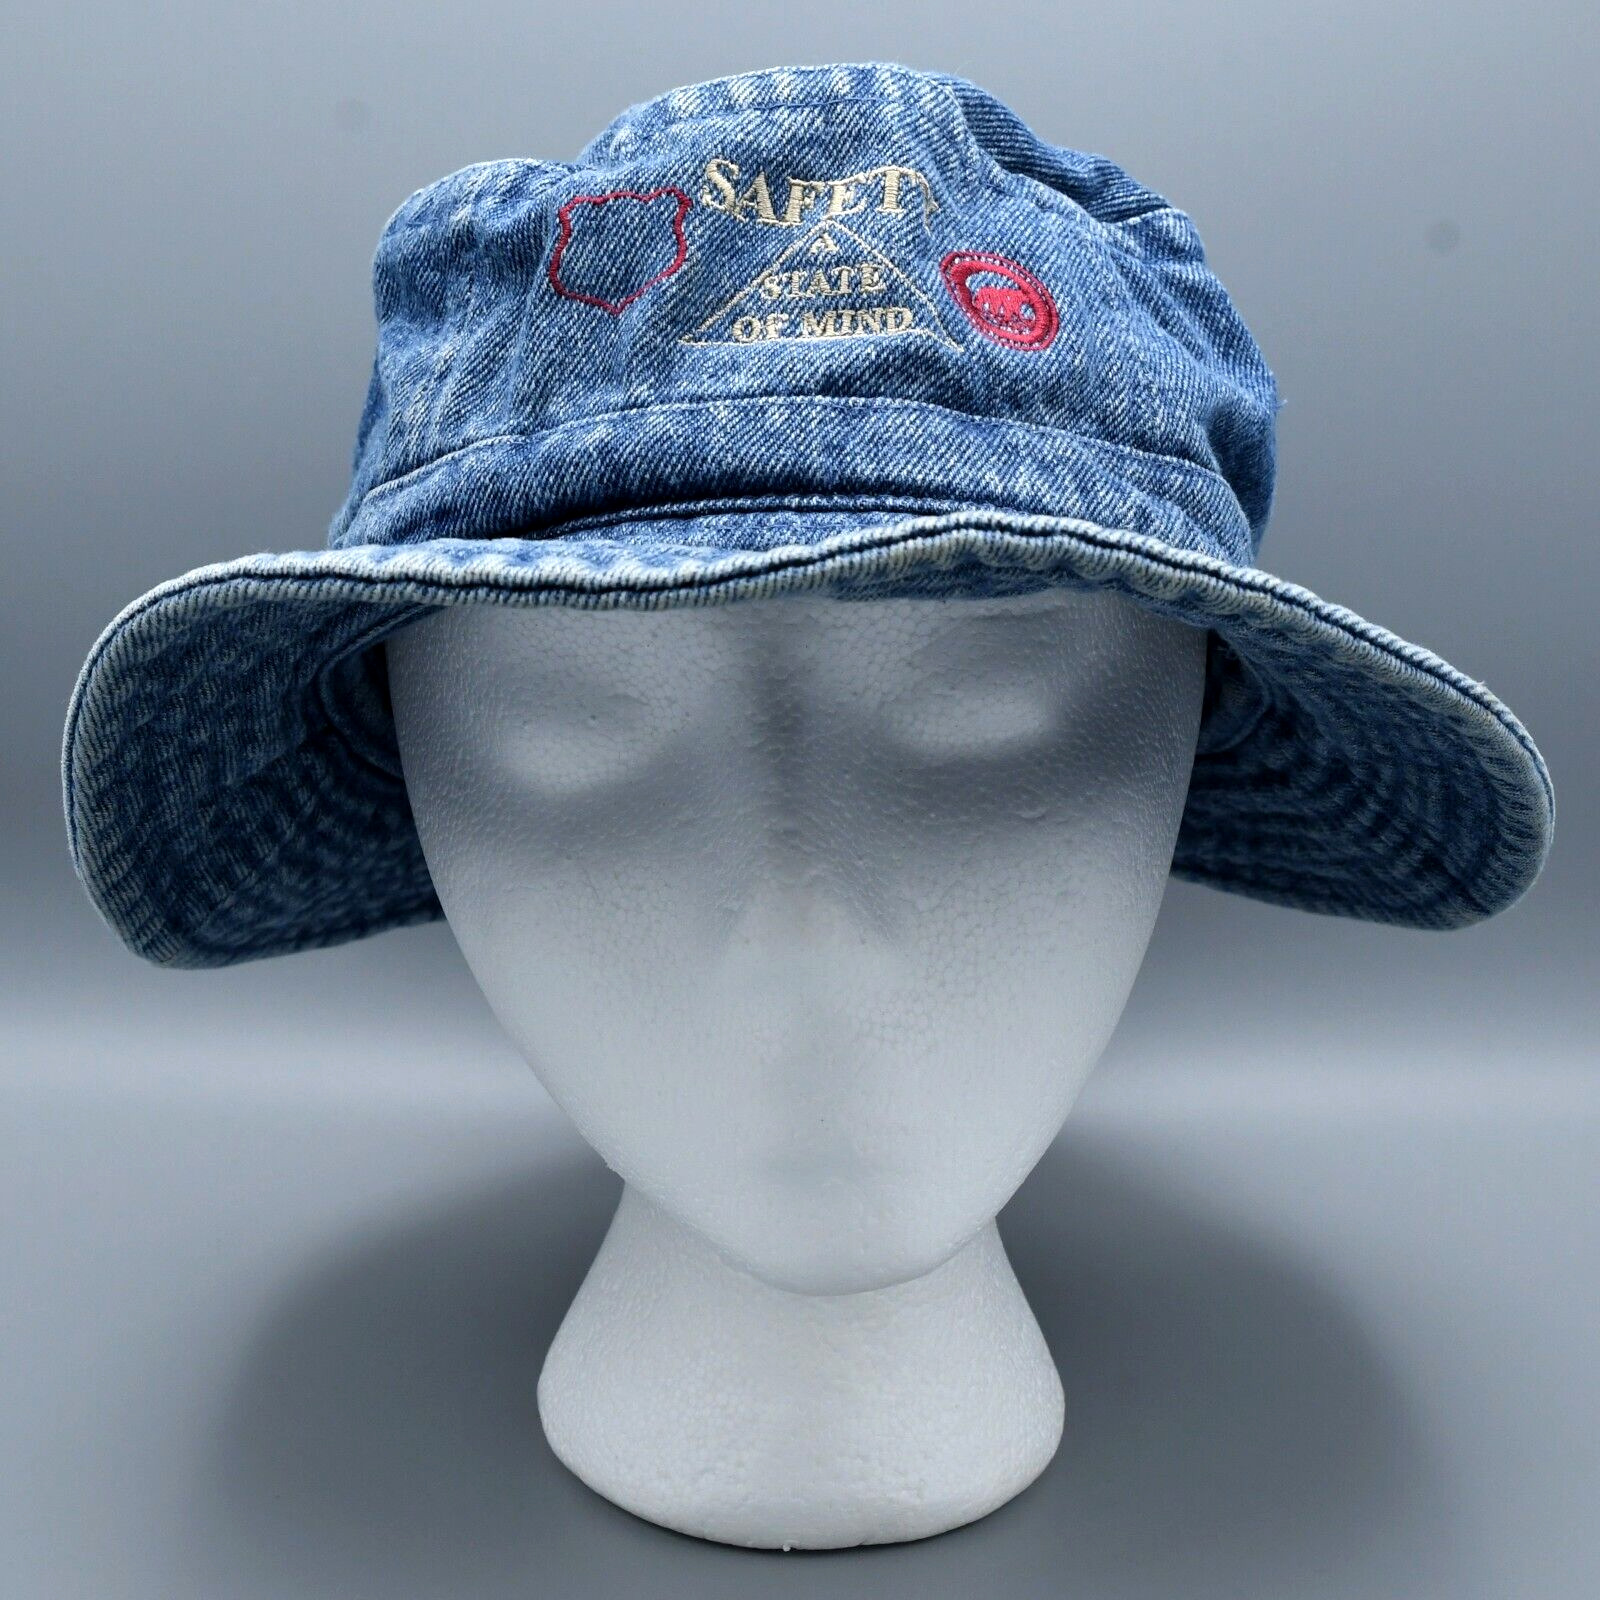 Algoma Wisconsin Central Railroad Ltd Blue Jean Bucket Hat Vintage Safety